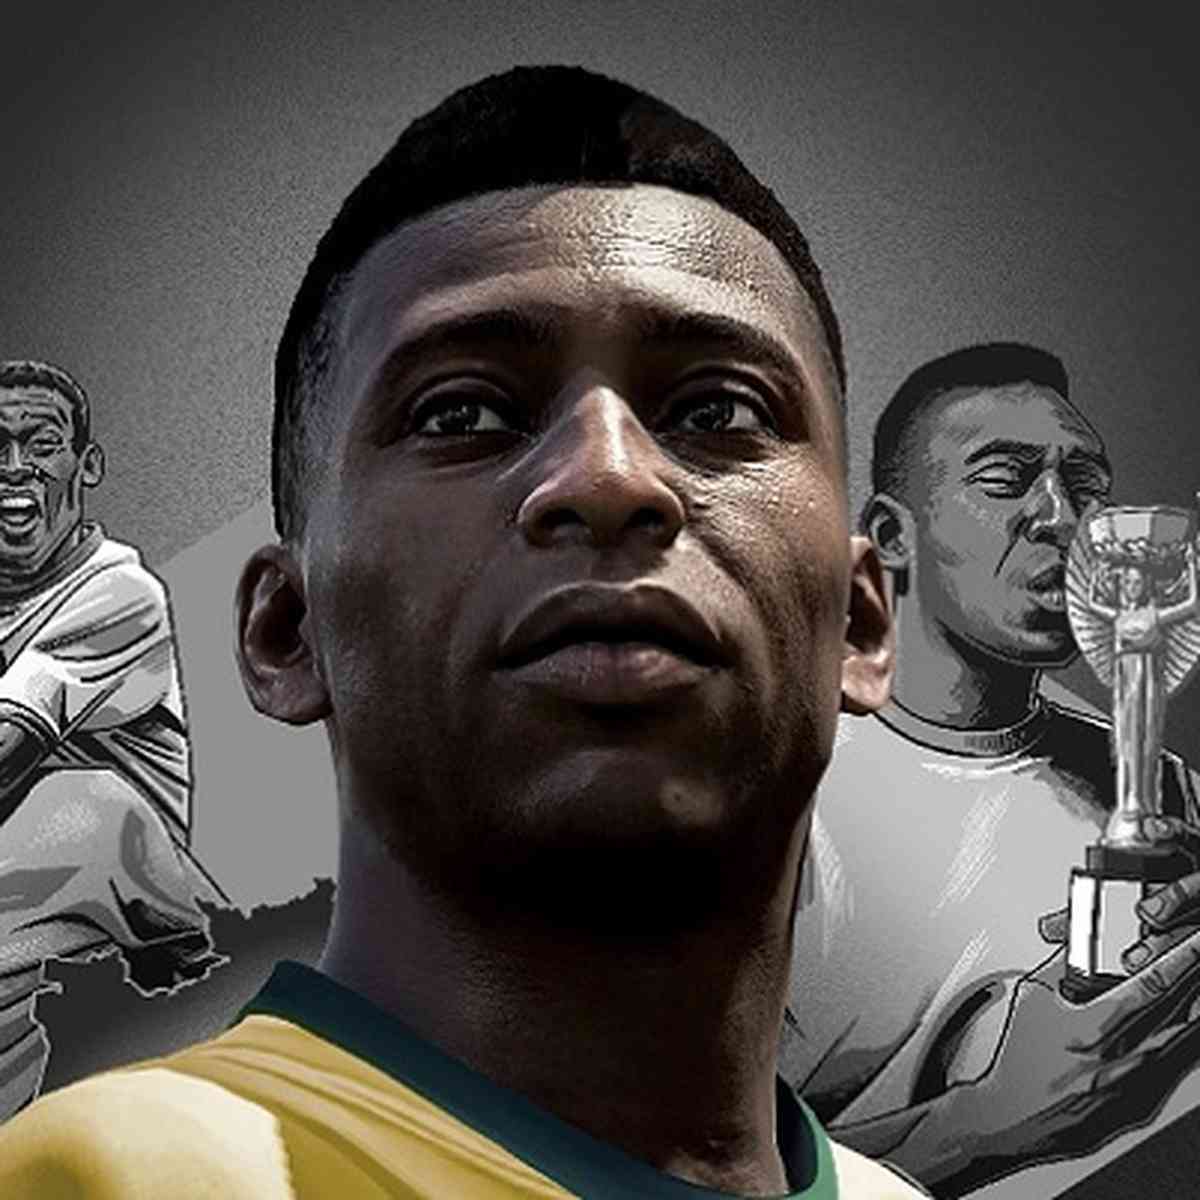 Pelé no Fifa 23: game disponibiliza carta 'perfeita' do Rei - Superesportes